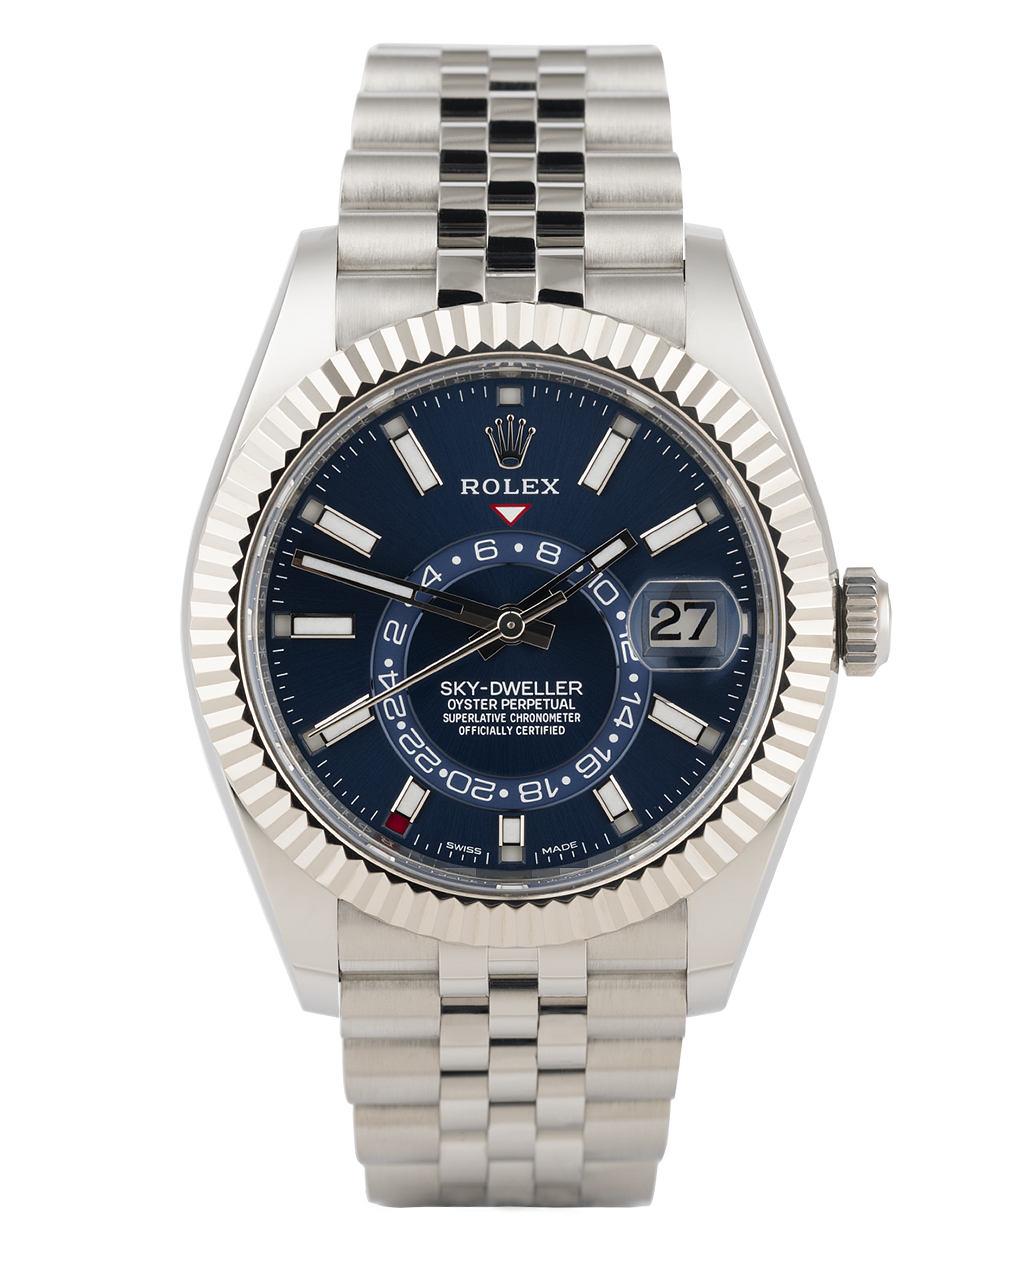 Rolex Sky Dweller Watches | ref 326934 | 326934 - Box & Certificate ...